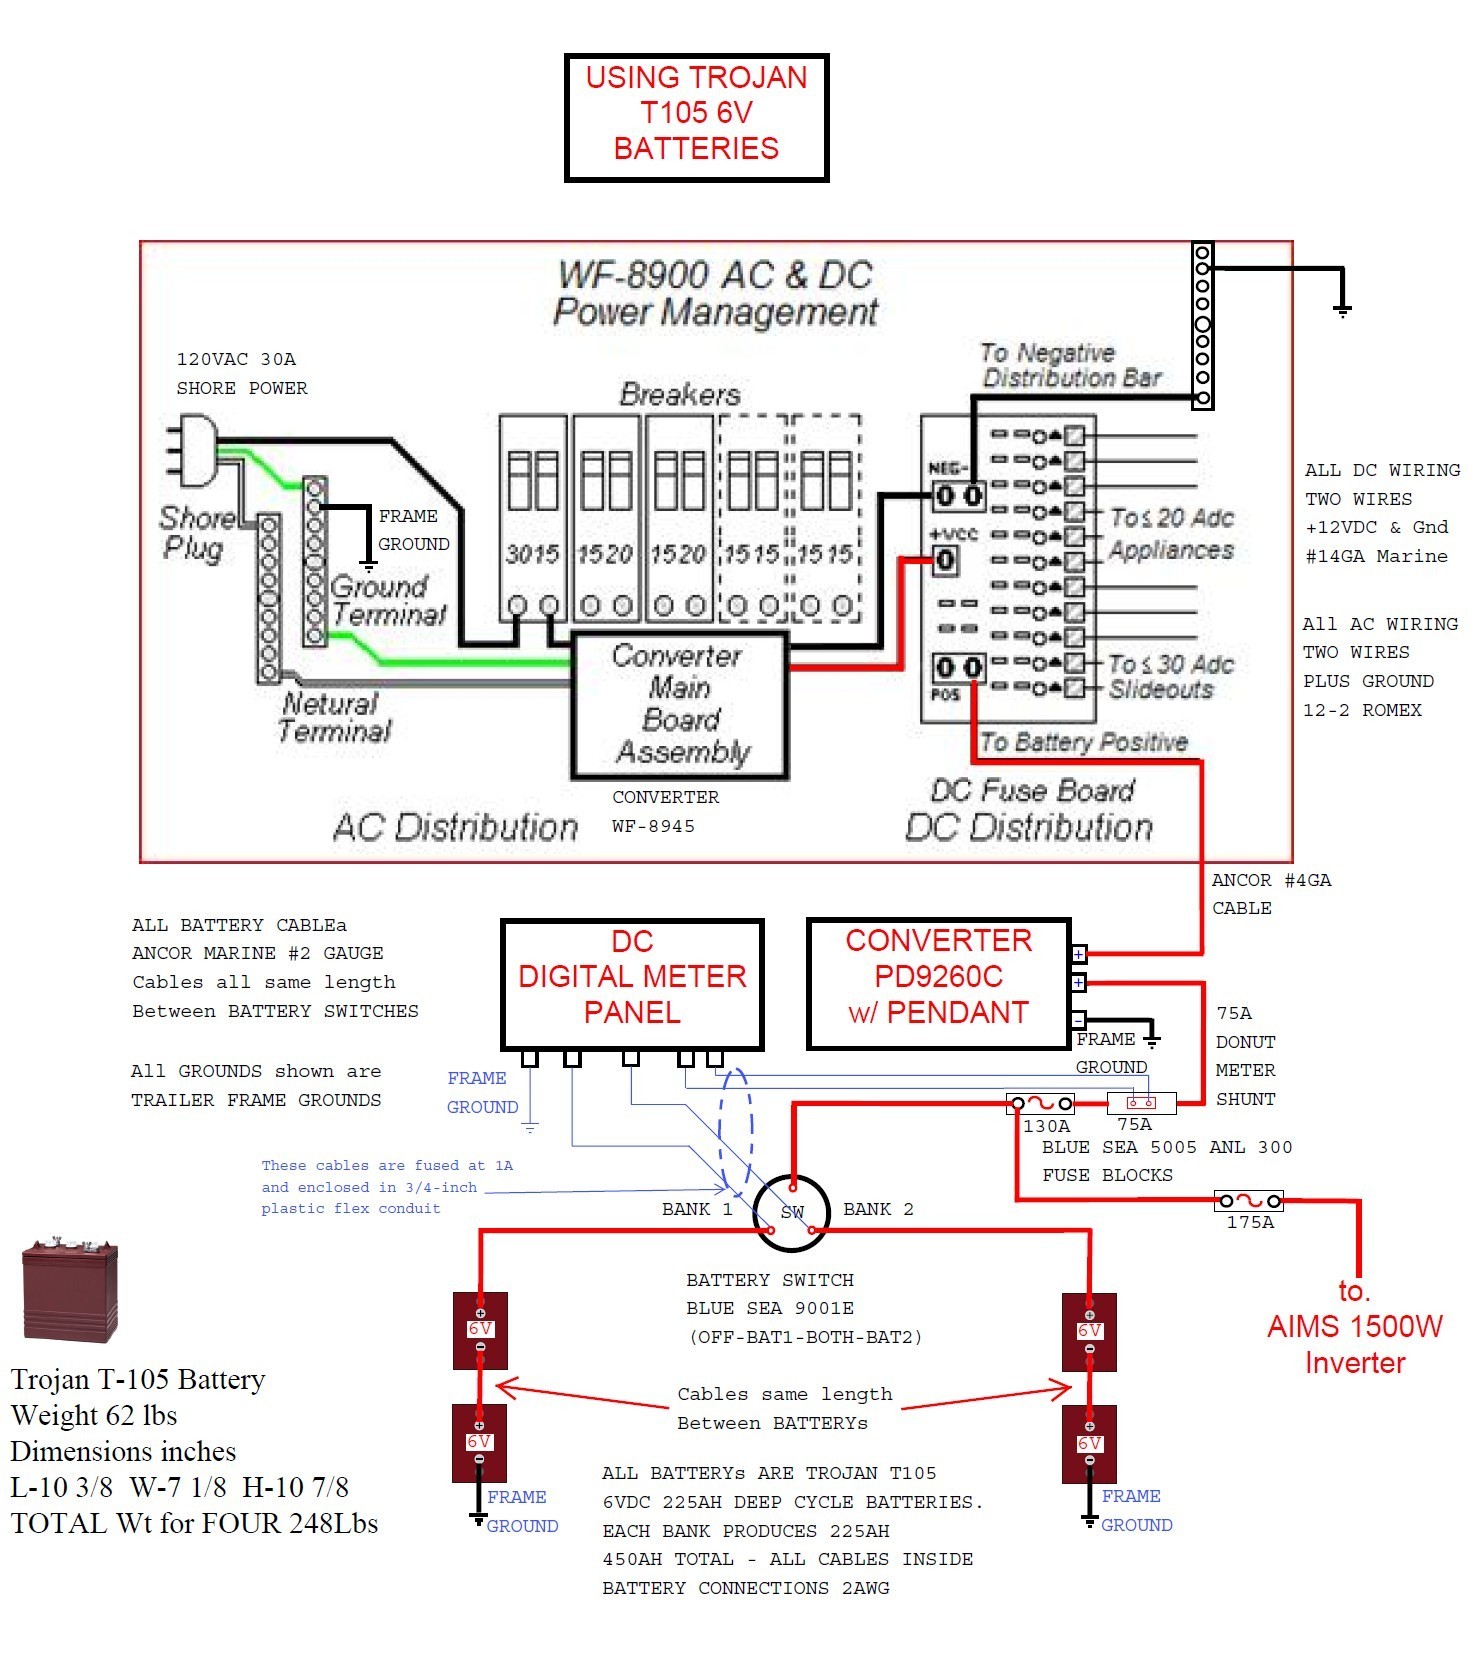 Wfco 8955 Wiring Diagram | Wiring Diagram Image